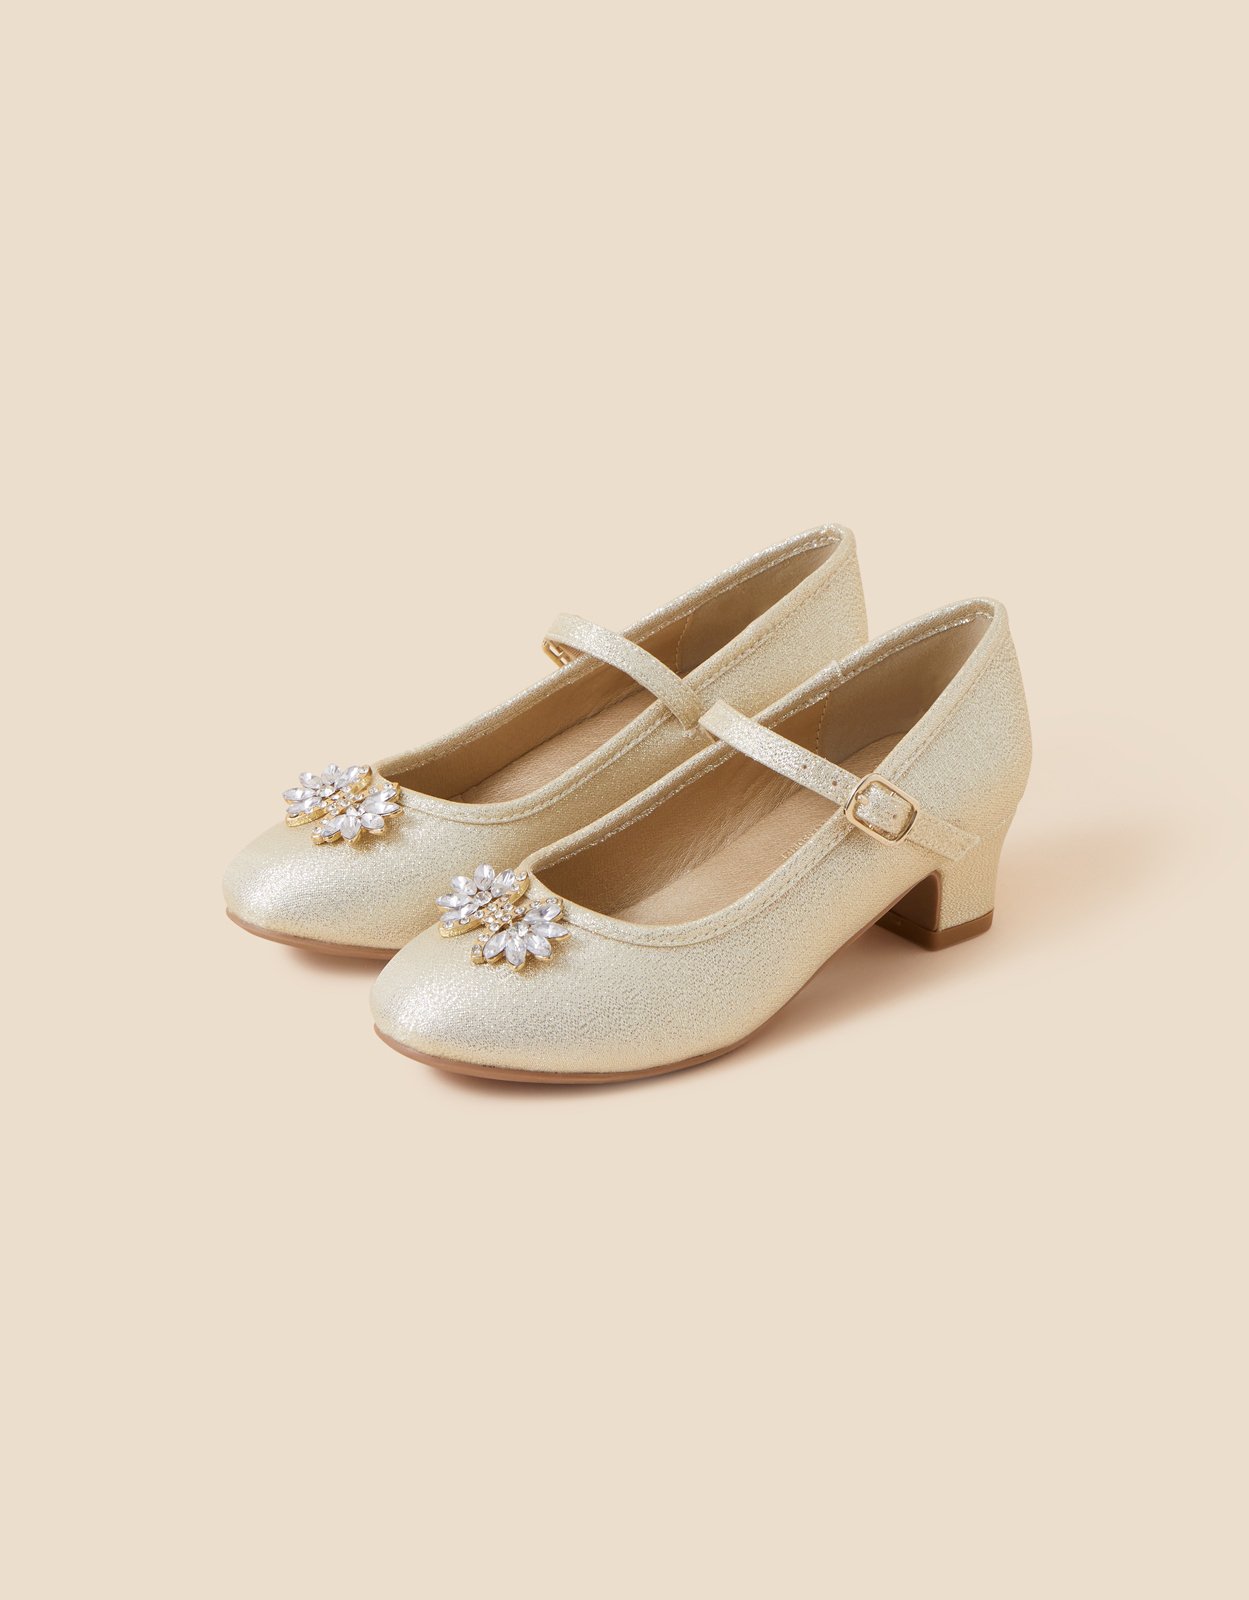 Accessorize Girl's Girls Shimmer Gem Flamenco Shoes Gold, Size: 1